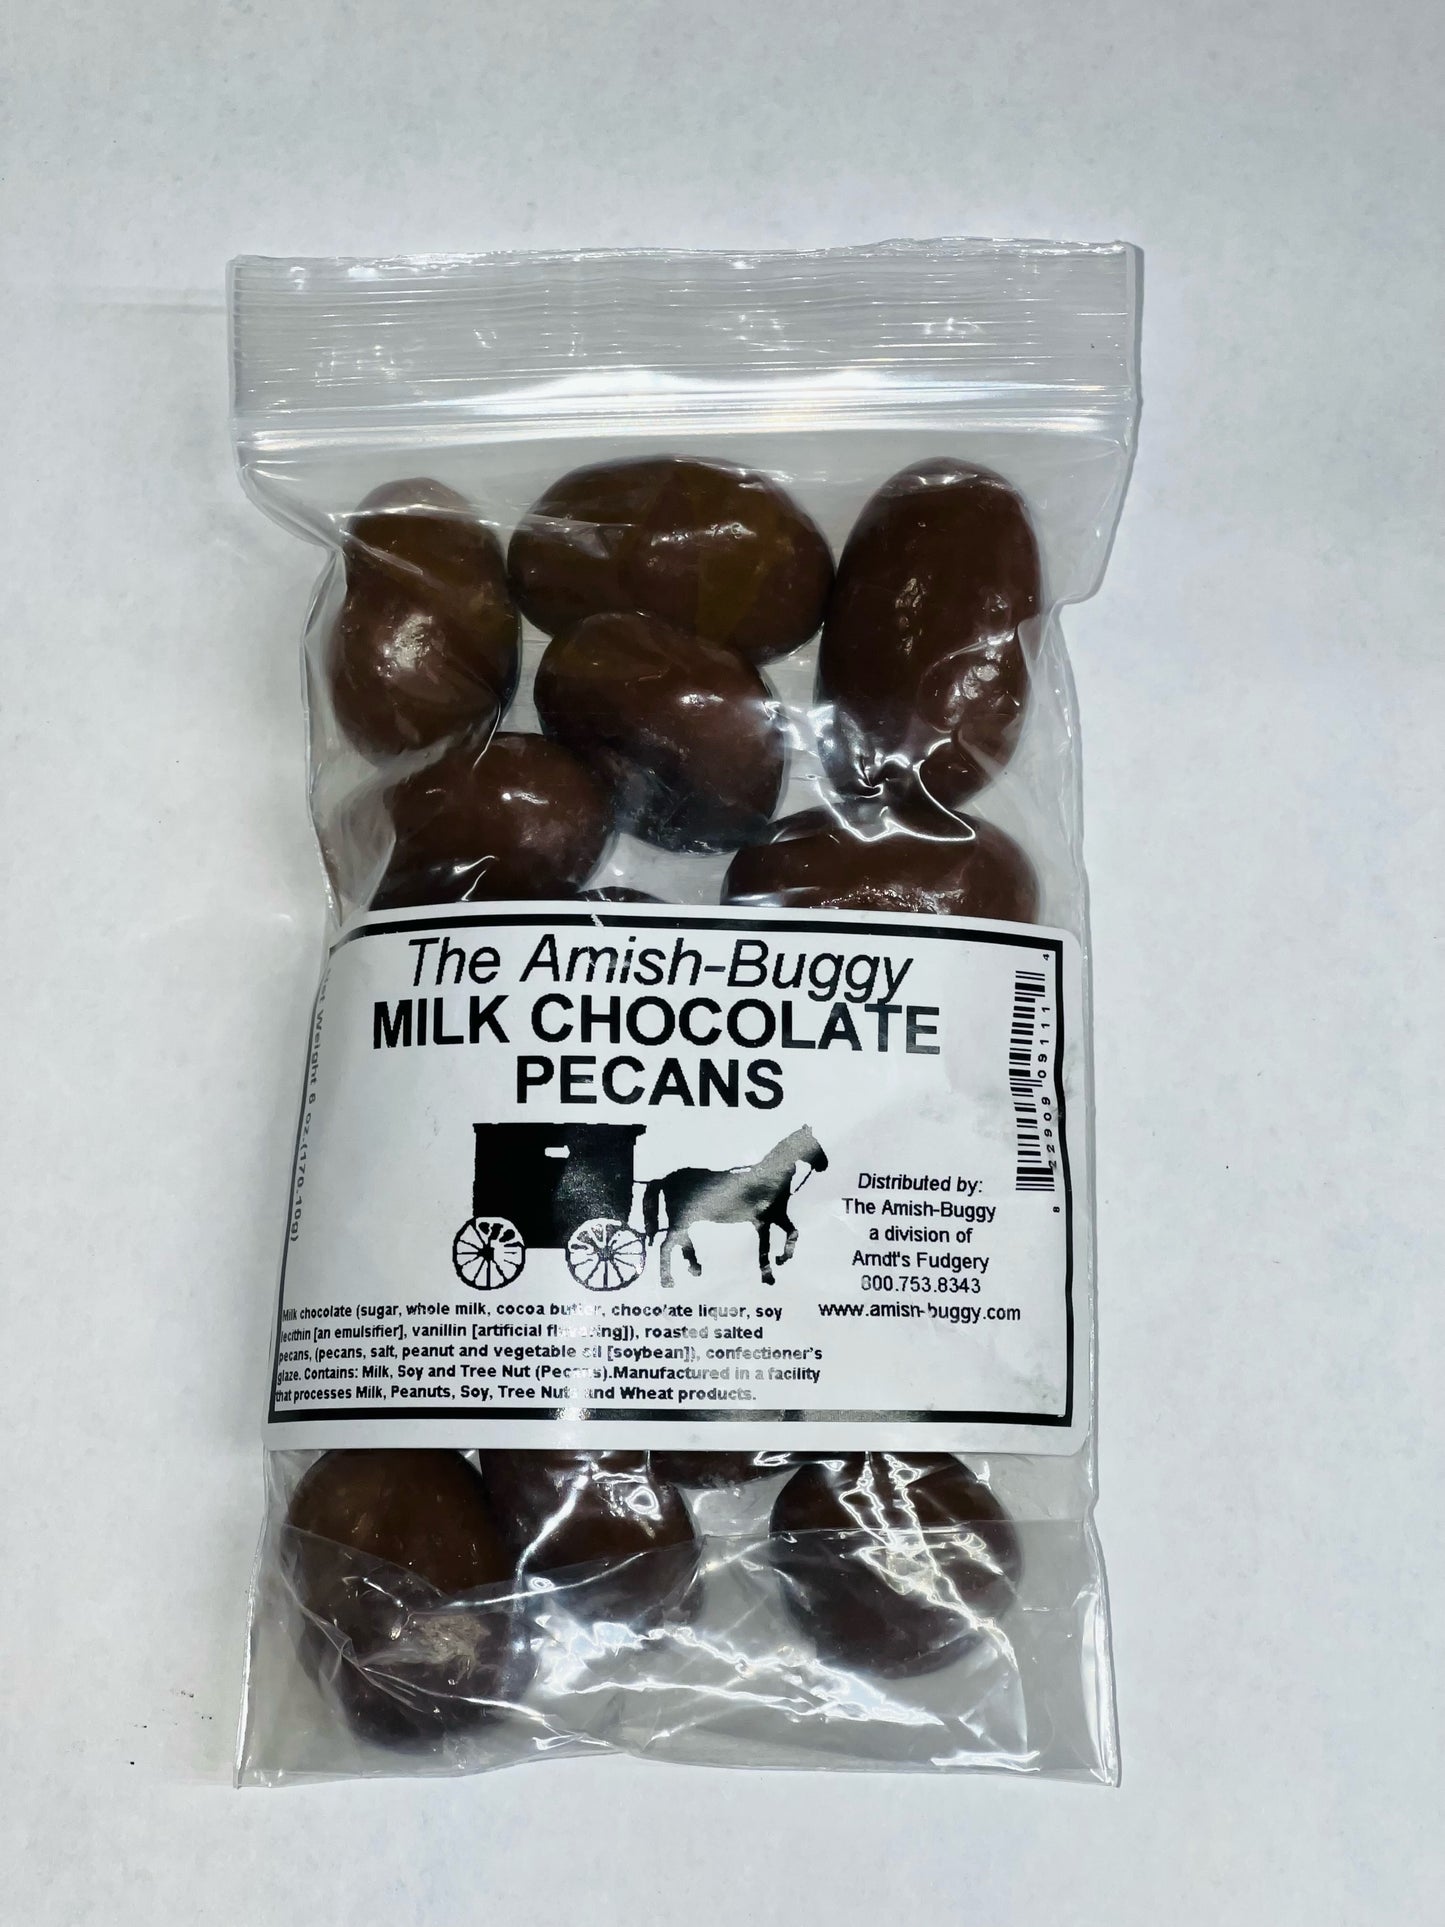 The Amish-Buggy Milk Chocolate Pecans